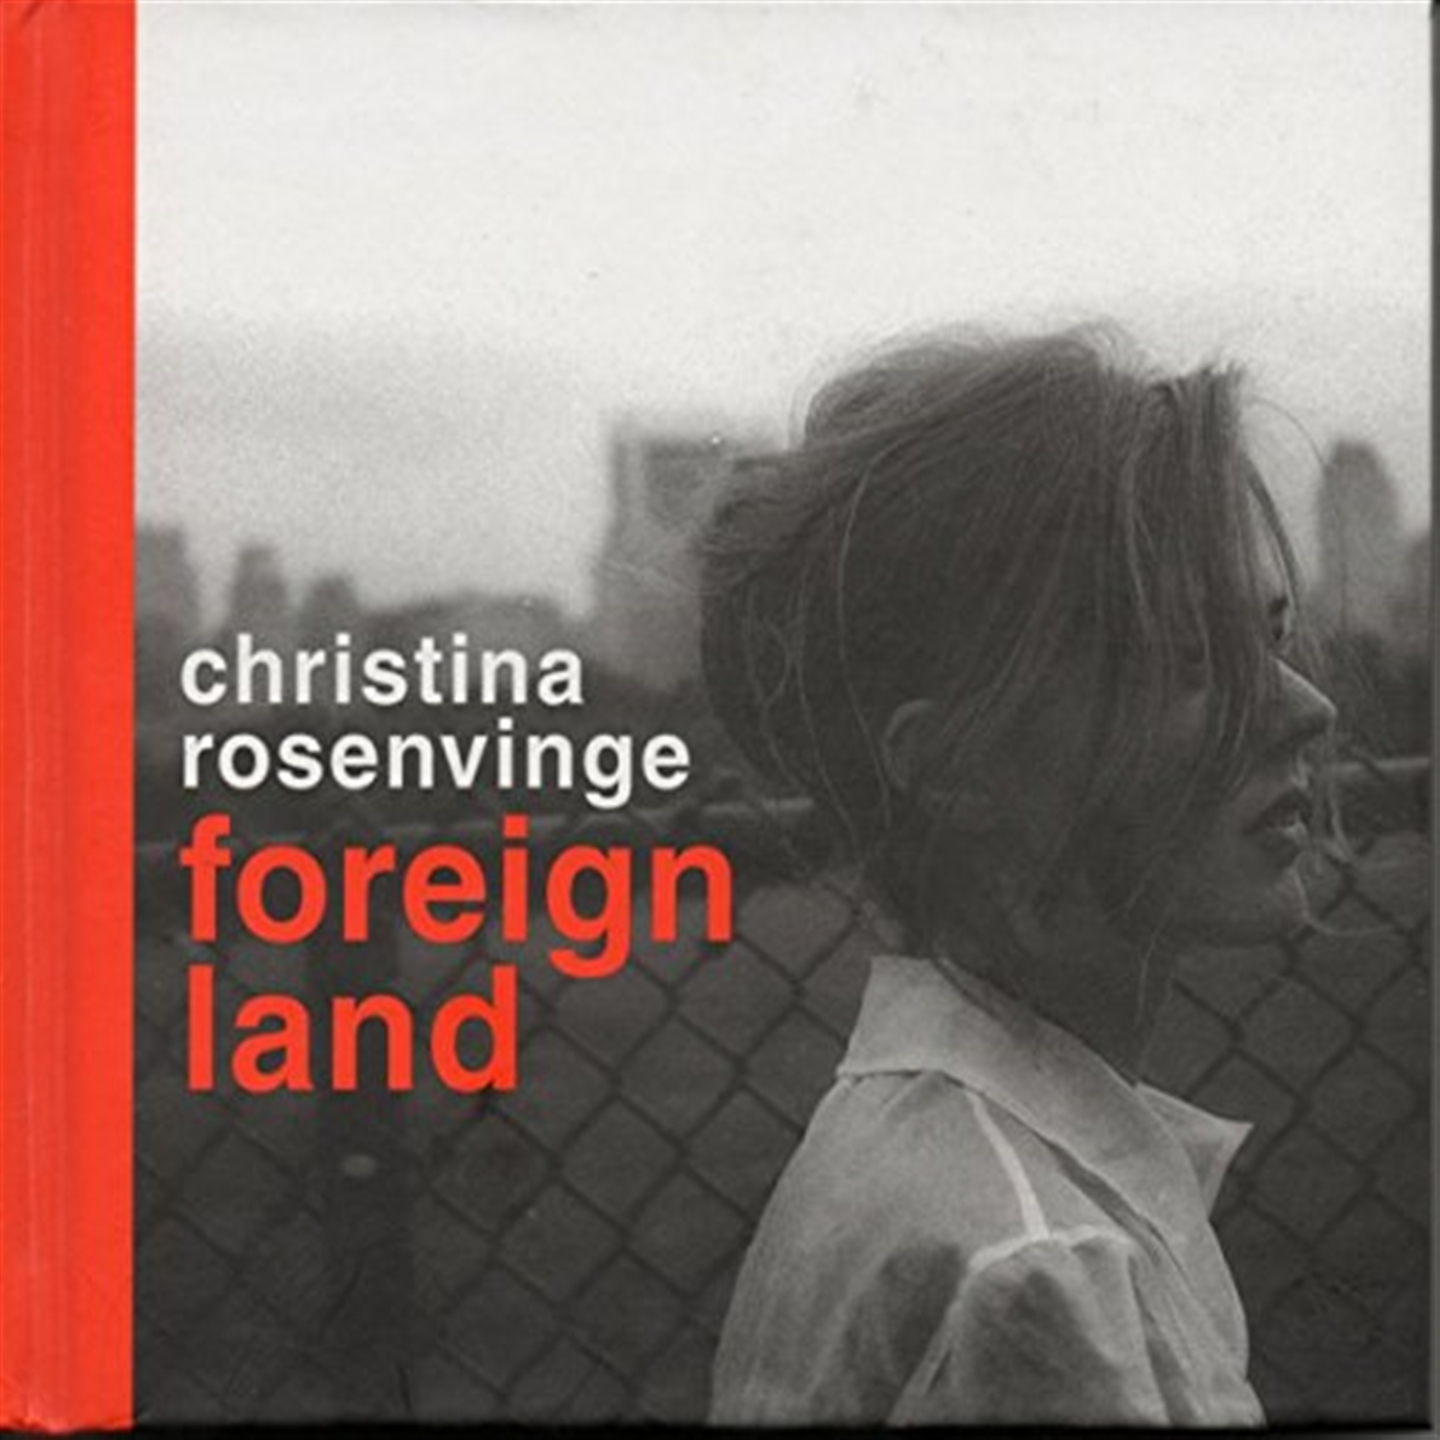 Rosenvinge Christina - Foreign Land - Photo 1/1